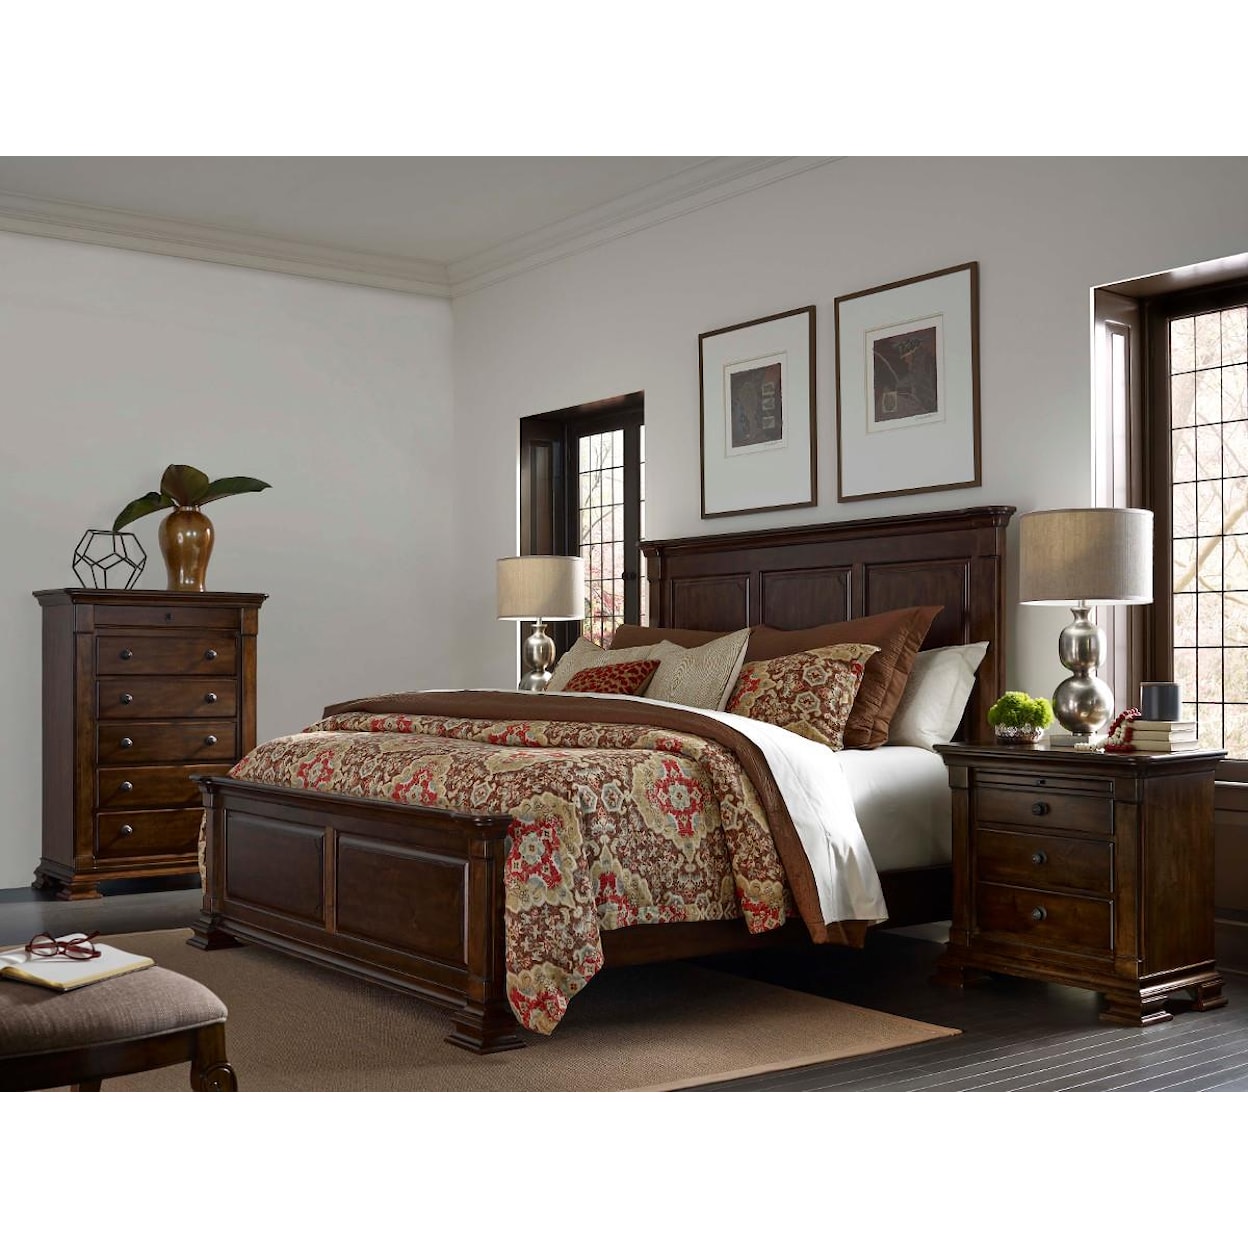 Kincaid Furniture Portolone King Bedroom Group